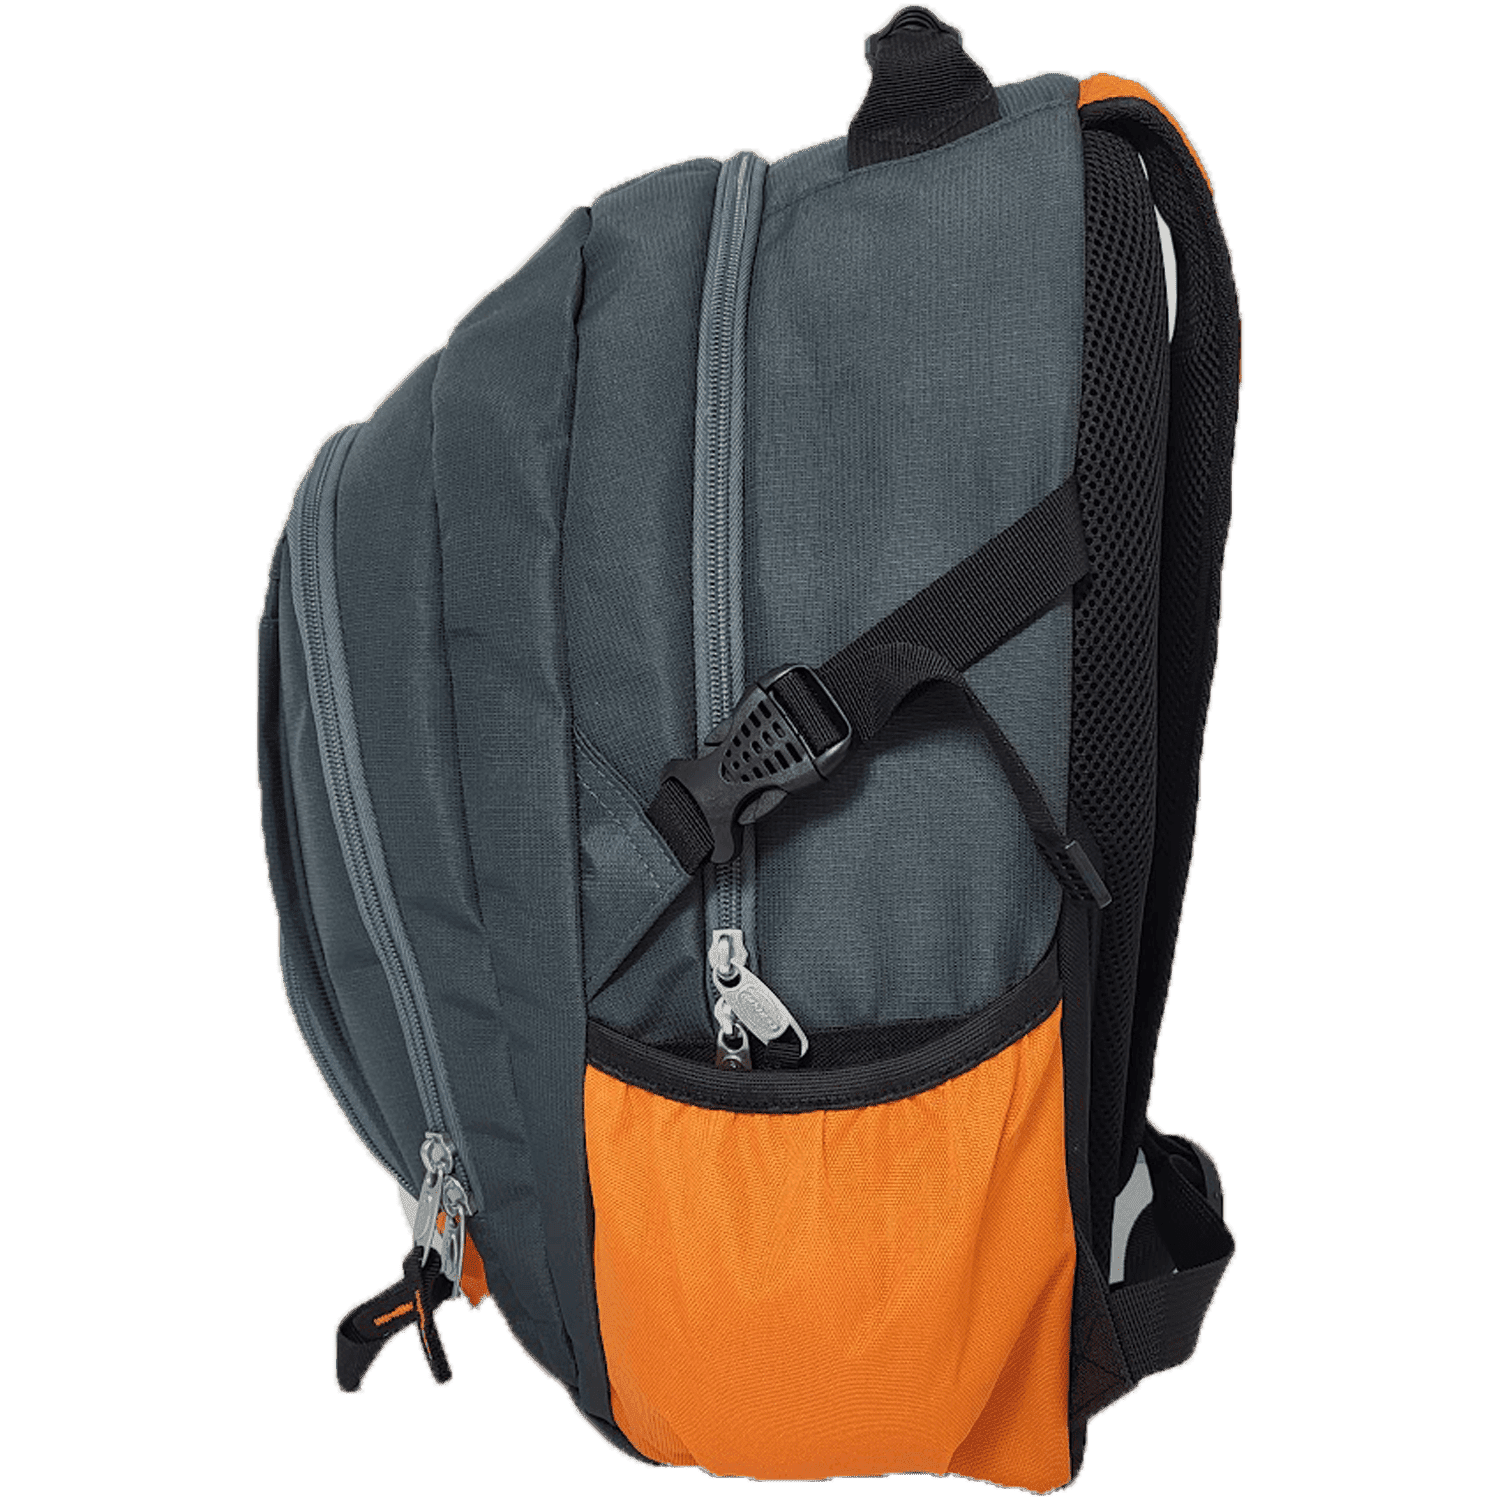 Sportech Ridge 53 – Bolton Backpack - Grey Orange 3 Shaws Department Stores